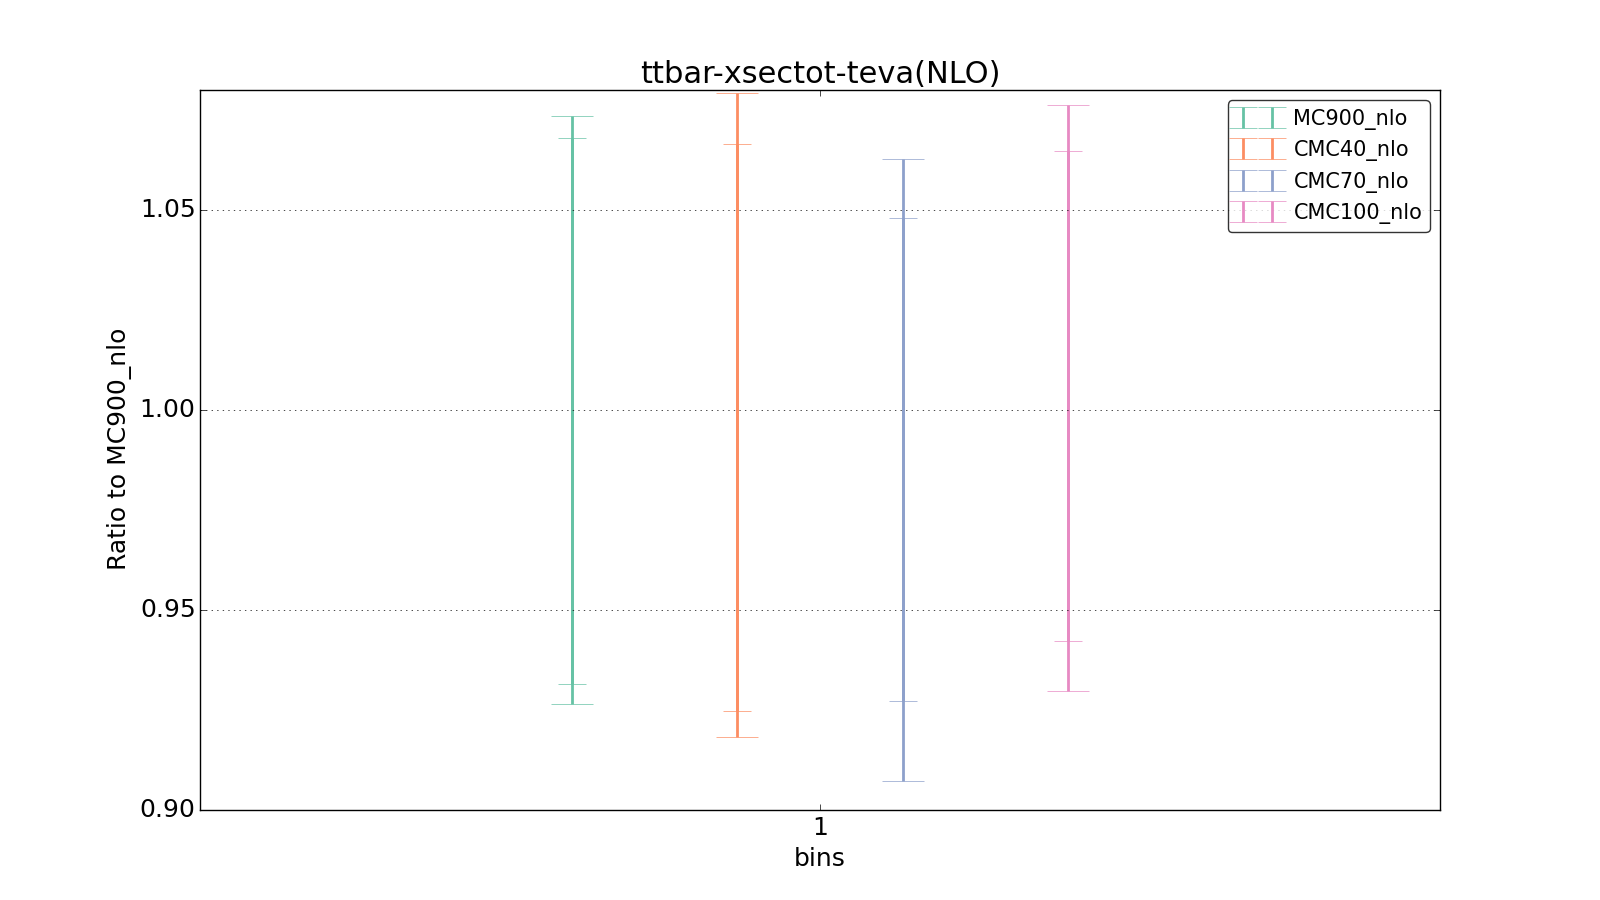 figure plots/CMCpheno/group_1_ciplot_ttbar-xsectot-teva(NLO).png